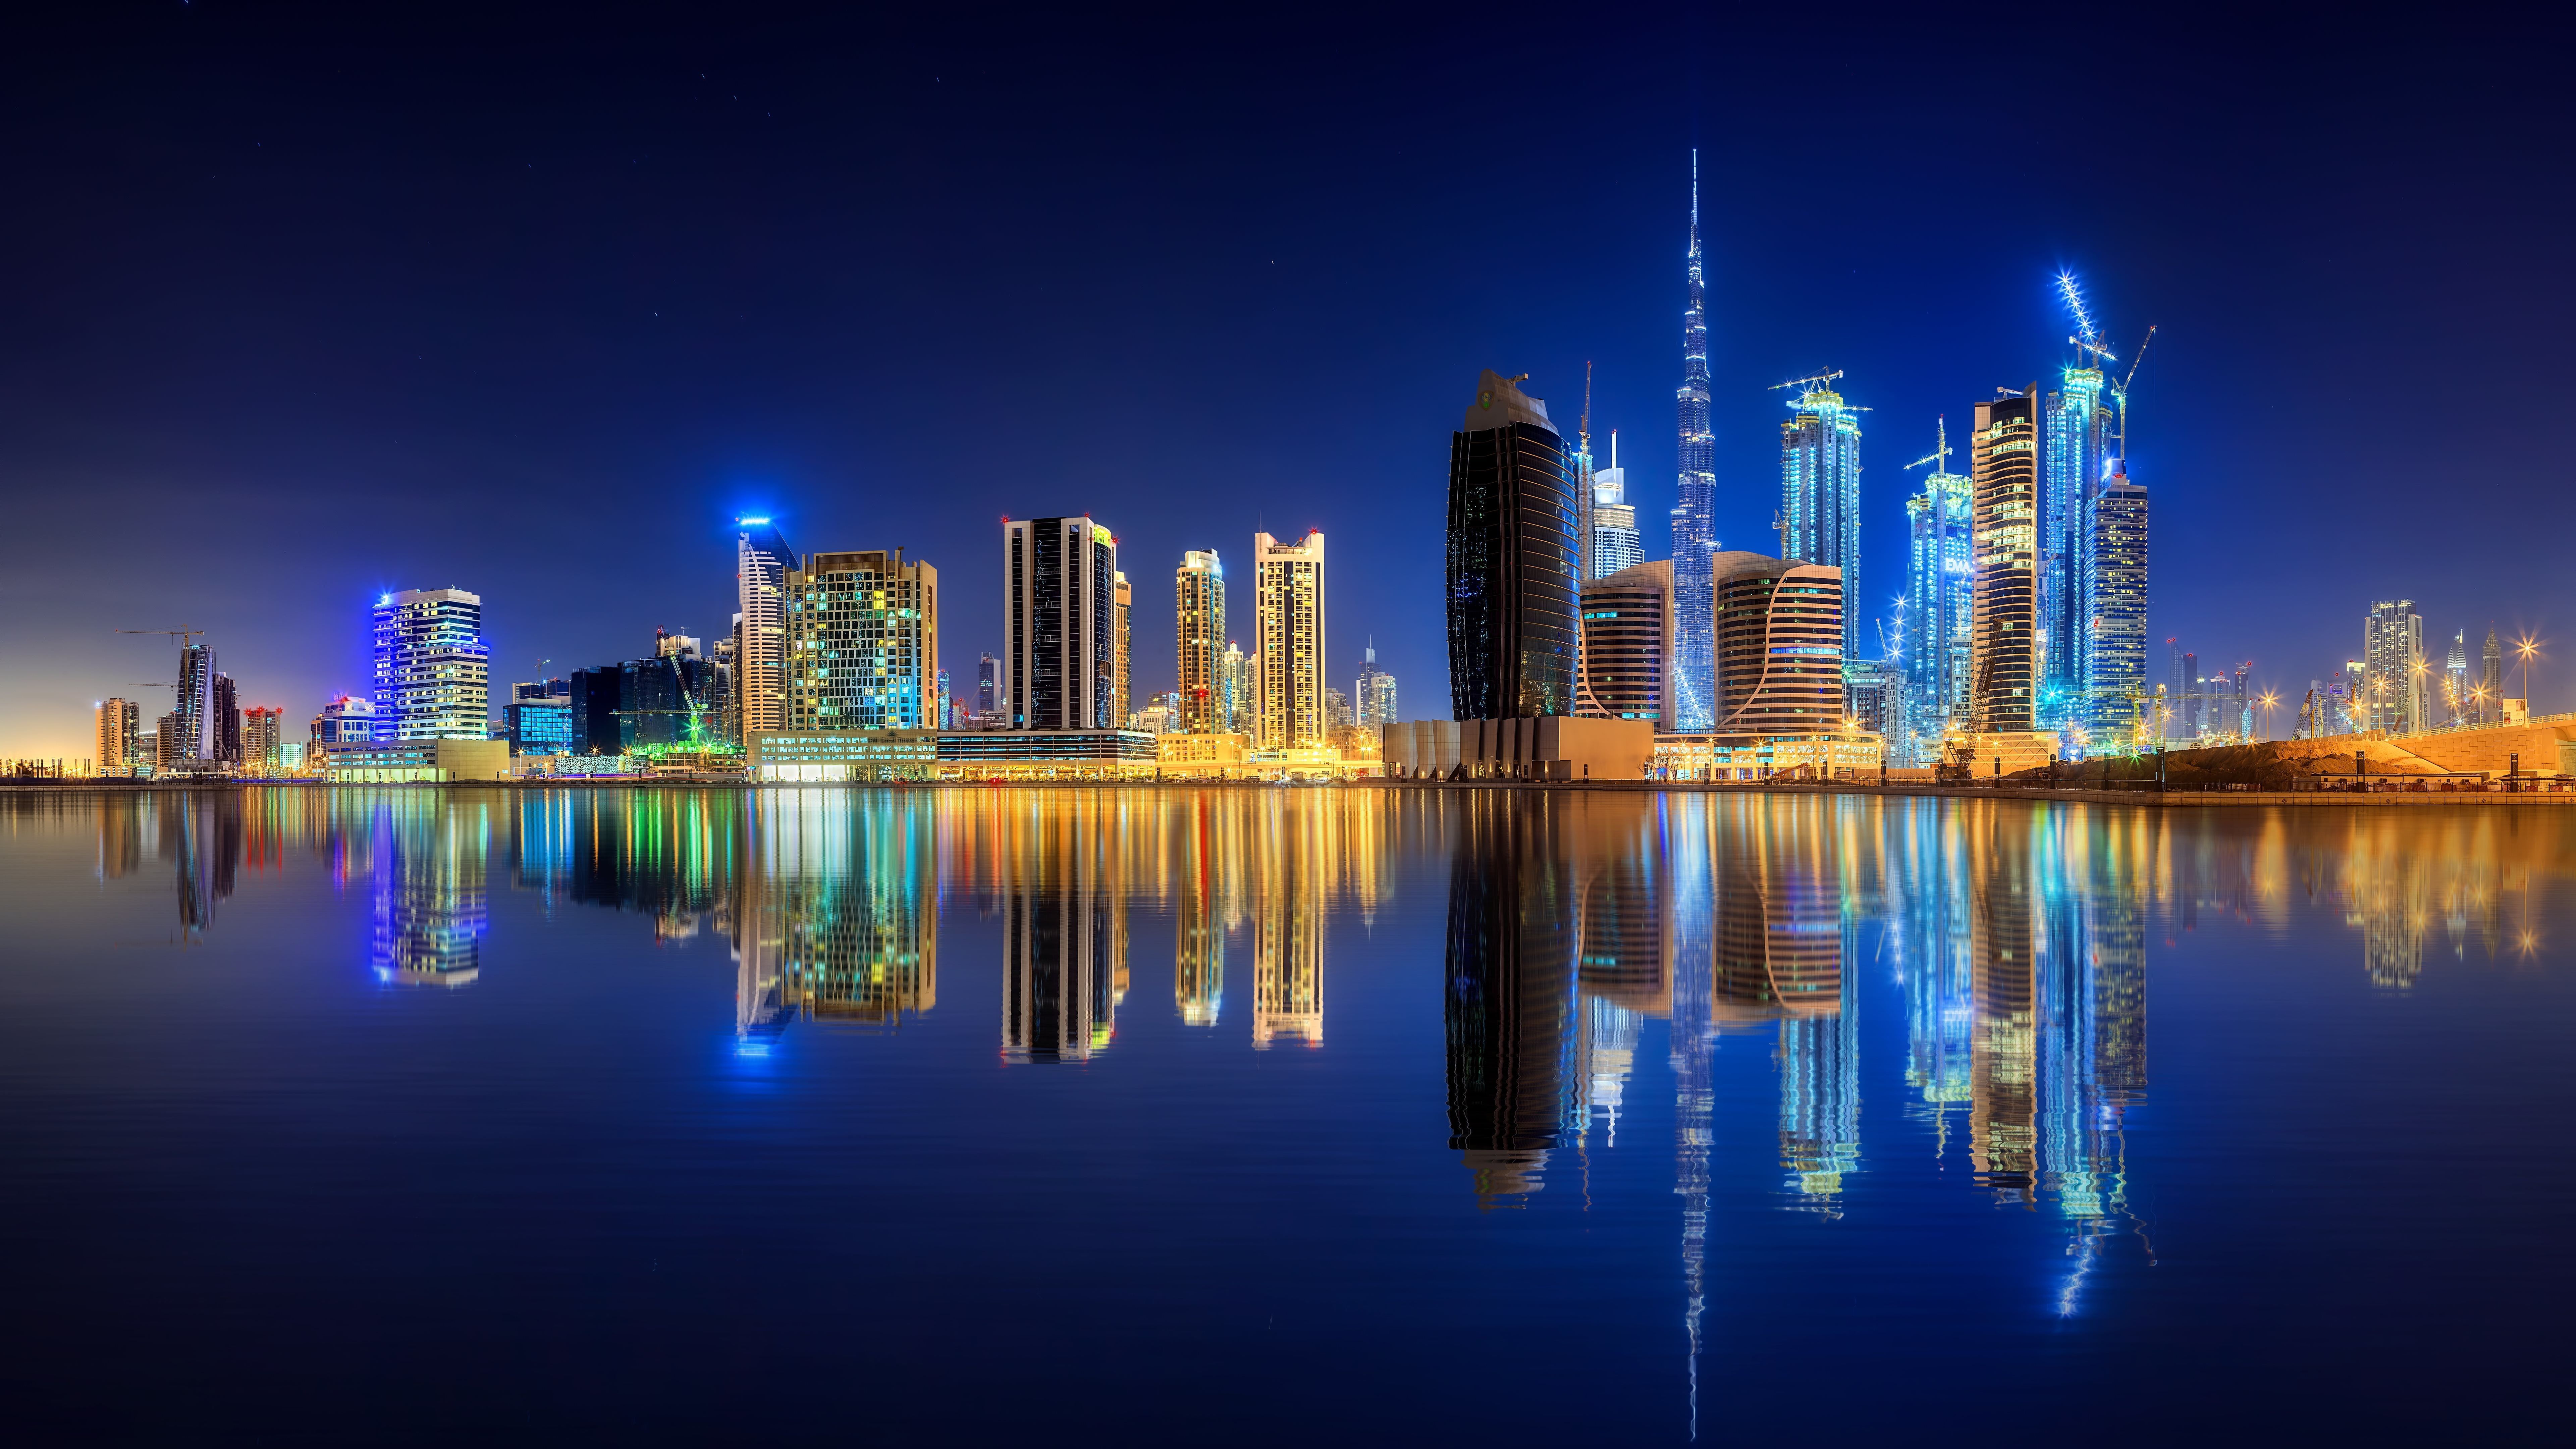 Wallpaper & Landscapes. City lights photography, City lights wallpaper, Dubai city